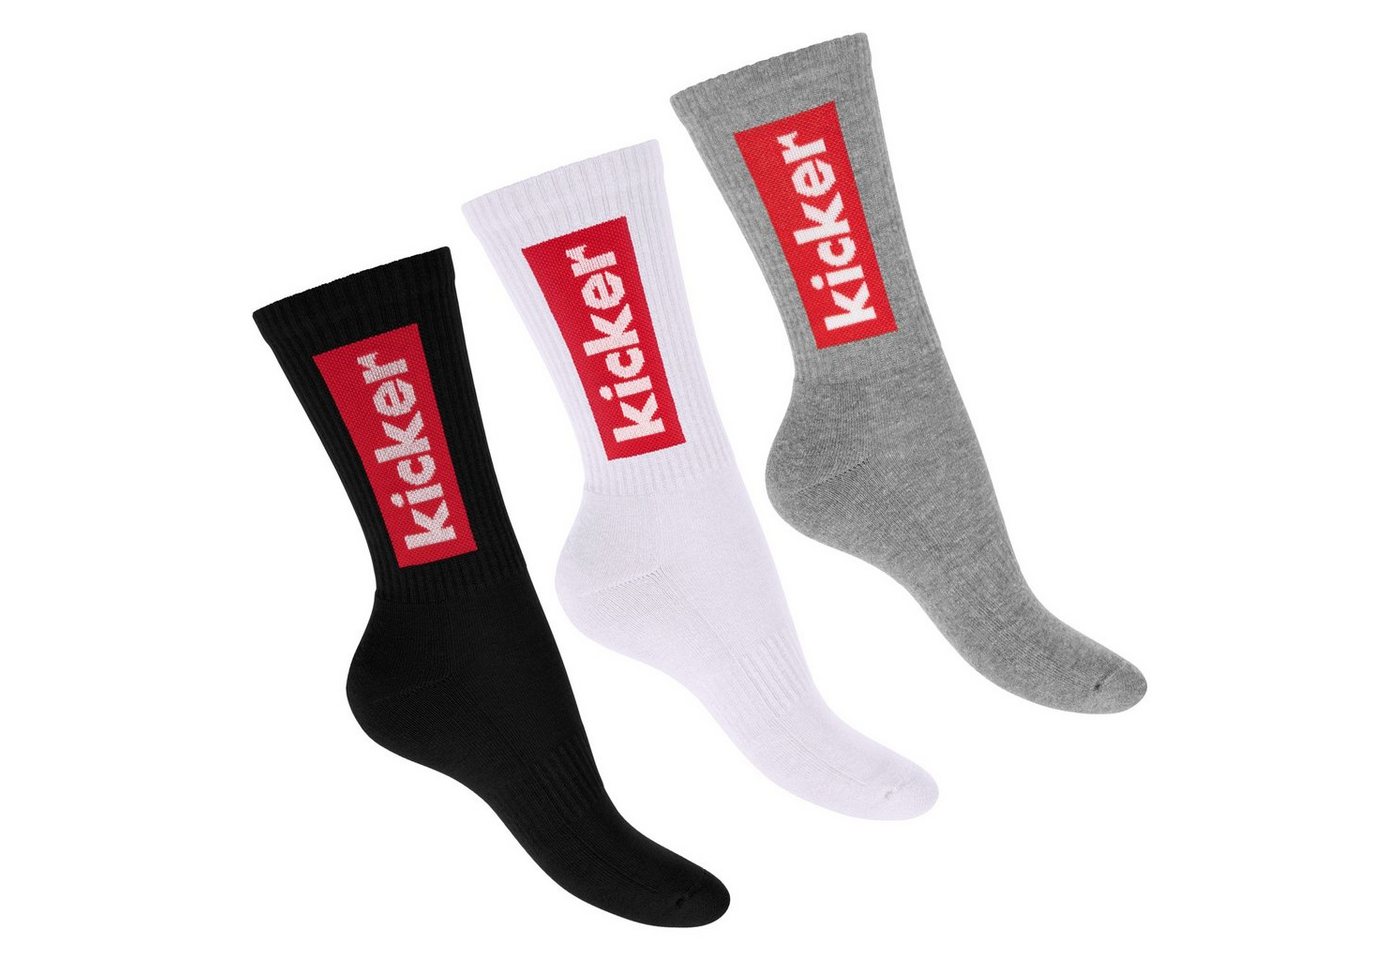 Kicker Tennissocken kicker Damen & Herren Crew Socks (3 Paar) Schwarz Weiß Grau 35-38 (3-Paar) von Kicker